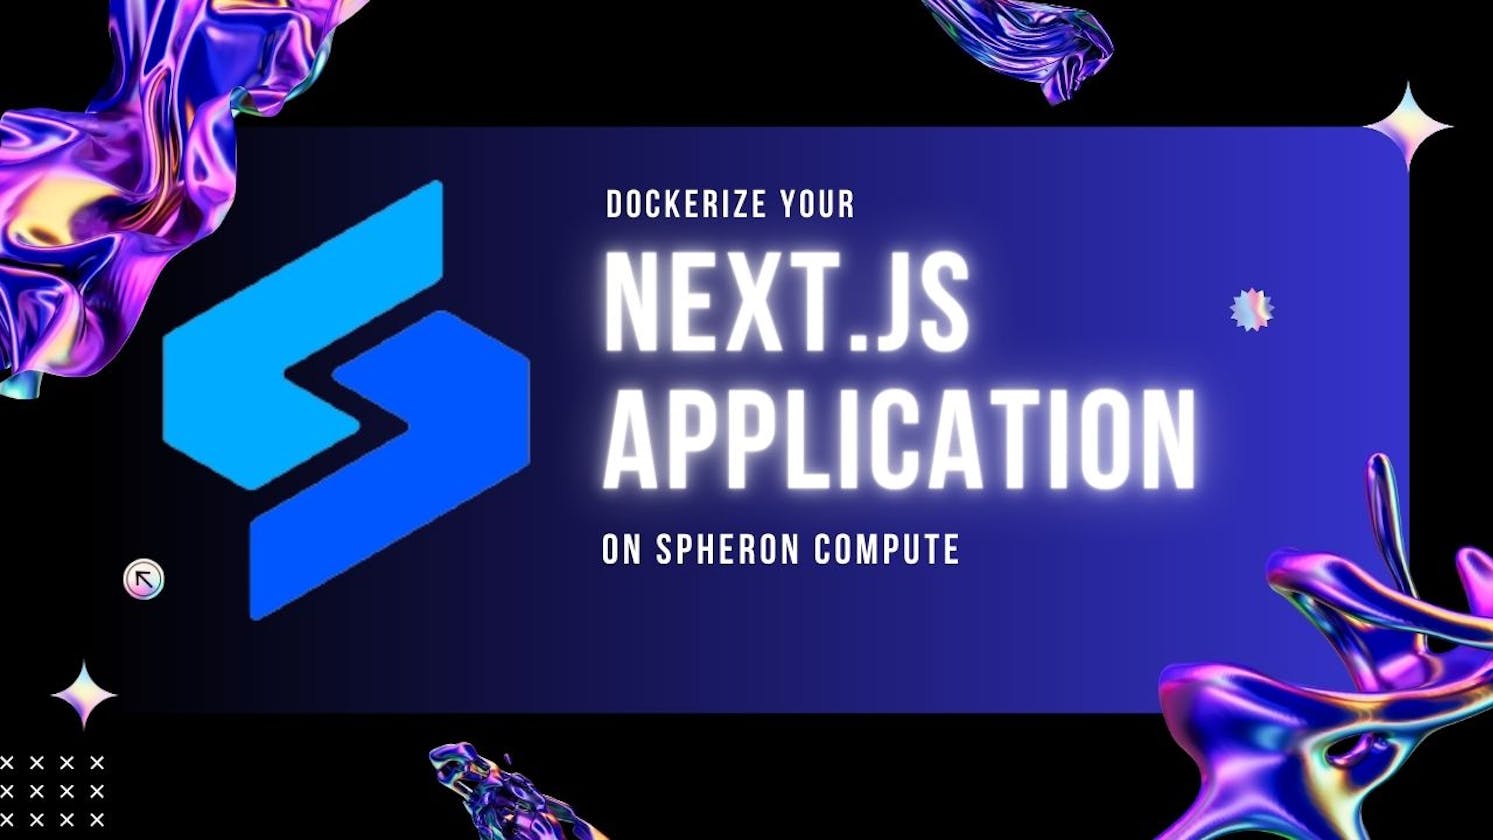 Dockerize your Next.js application on Spheron Compute